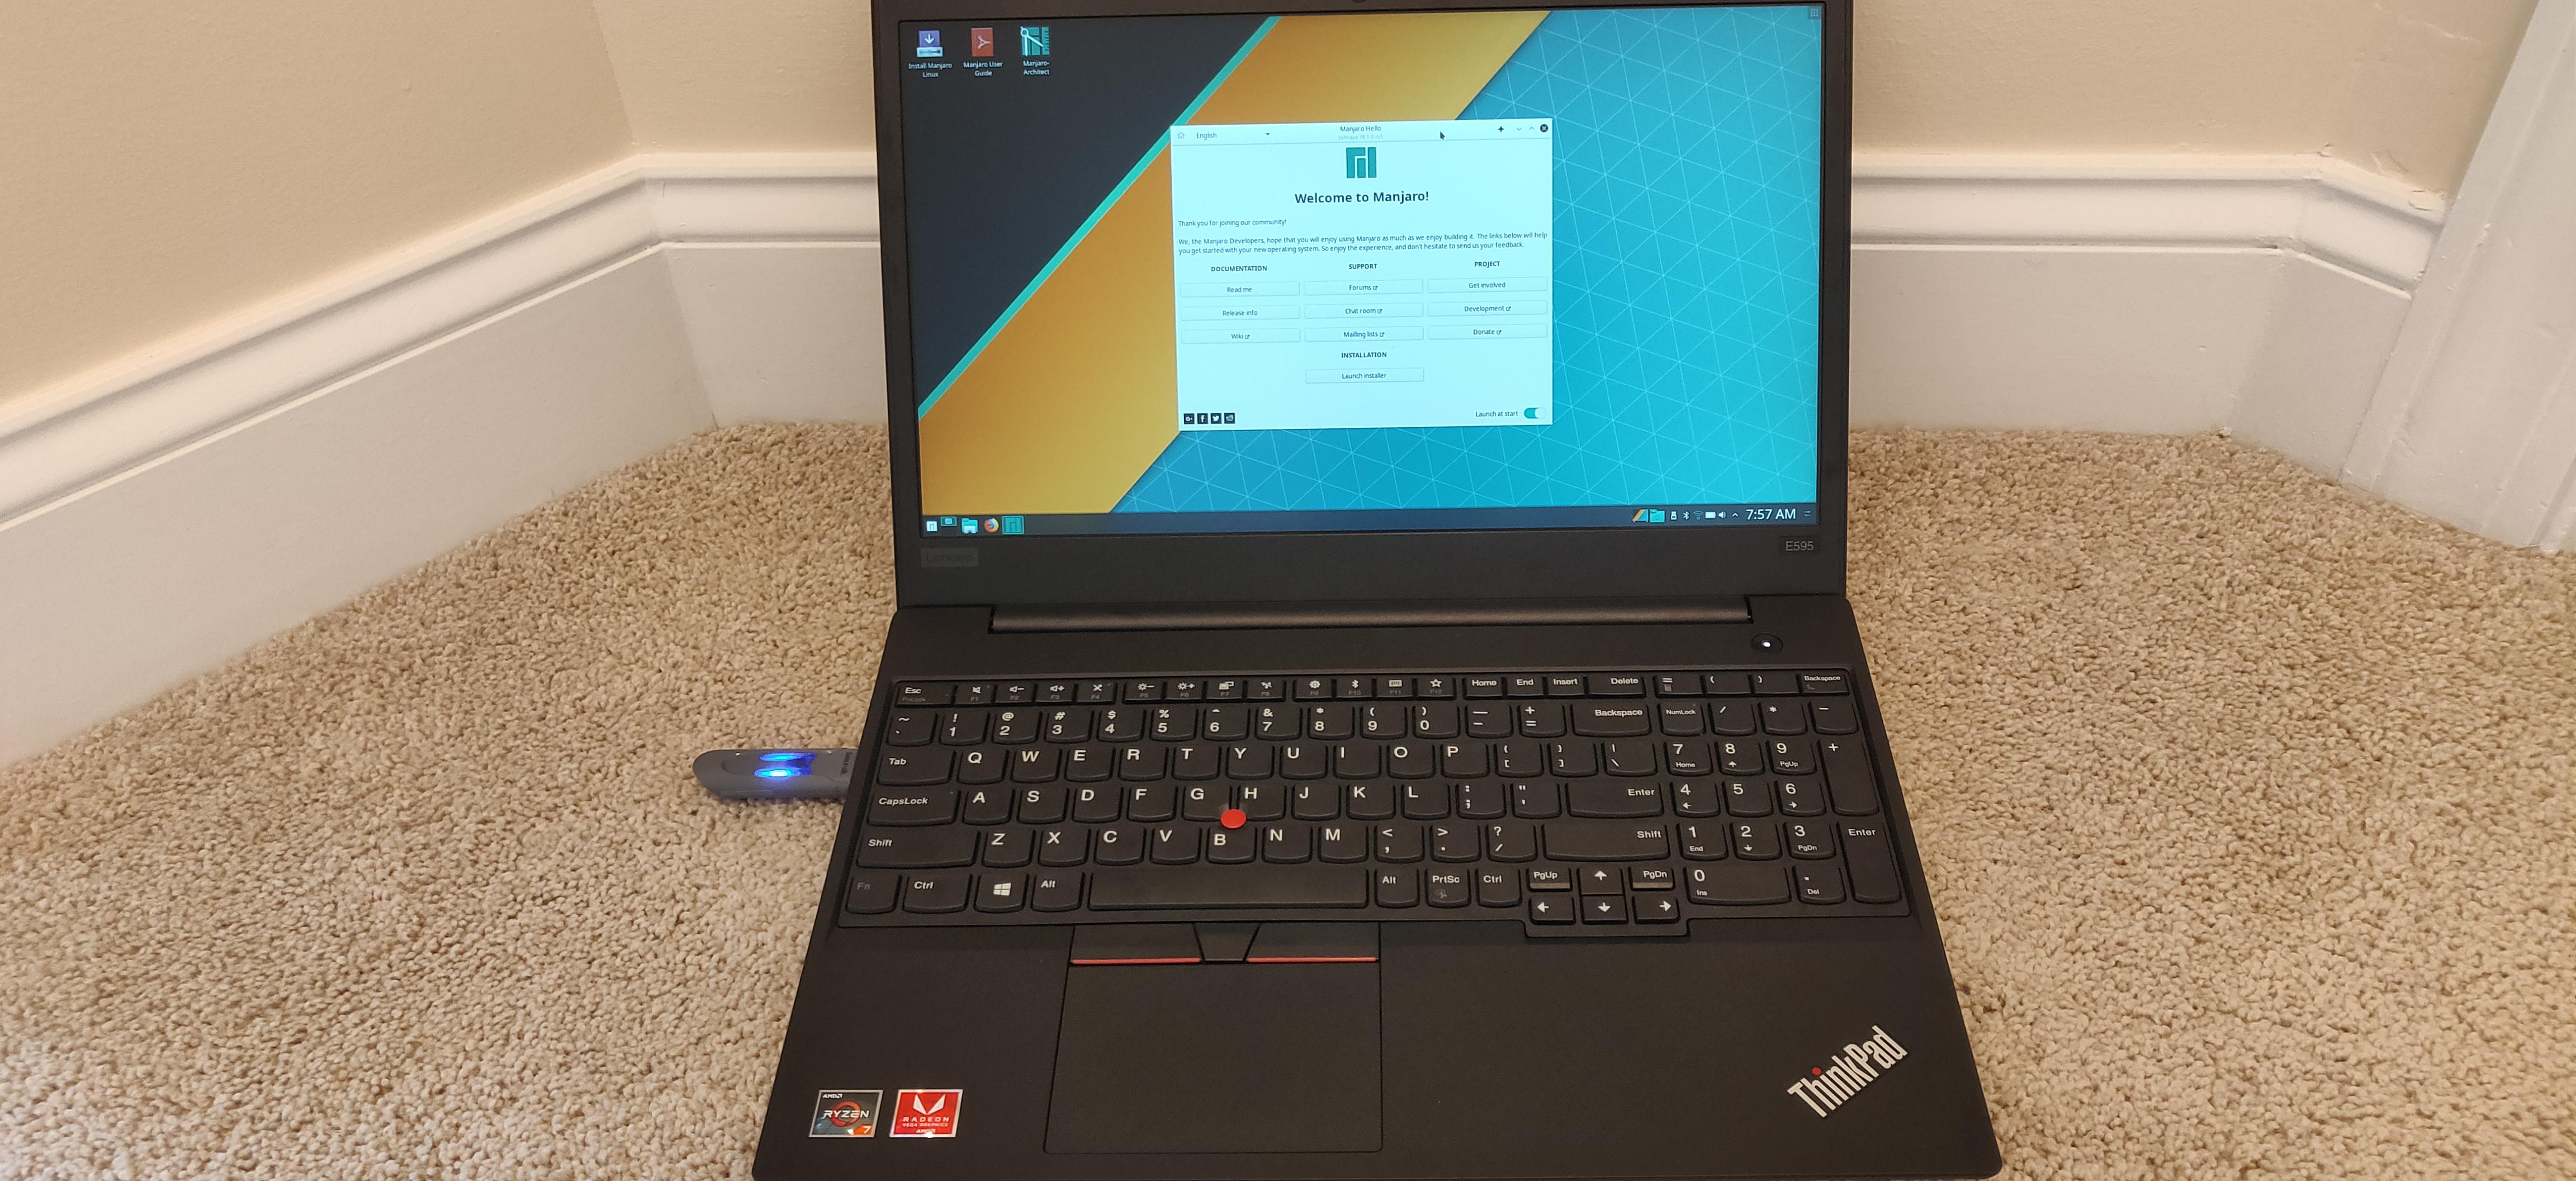 Lenovo E595 Ryzen 3700U Review and Linux - Laptops & Netbooks 